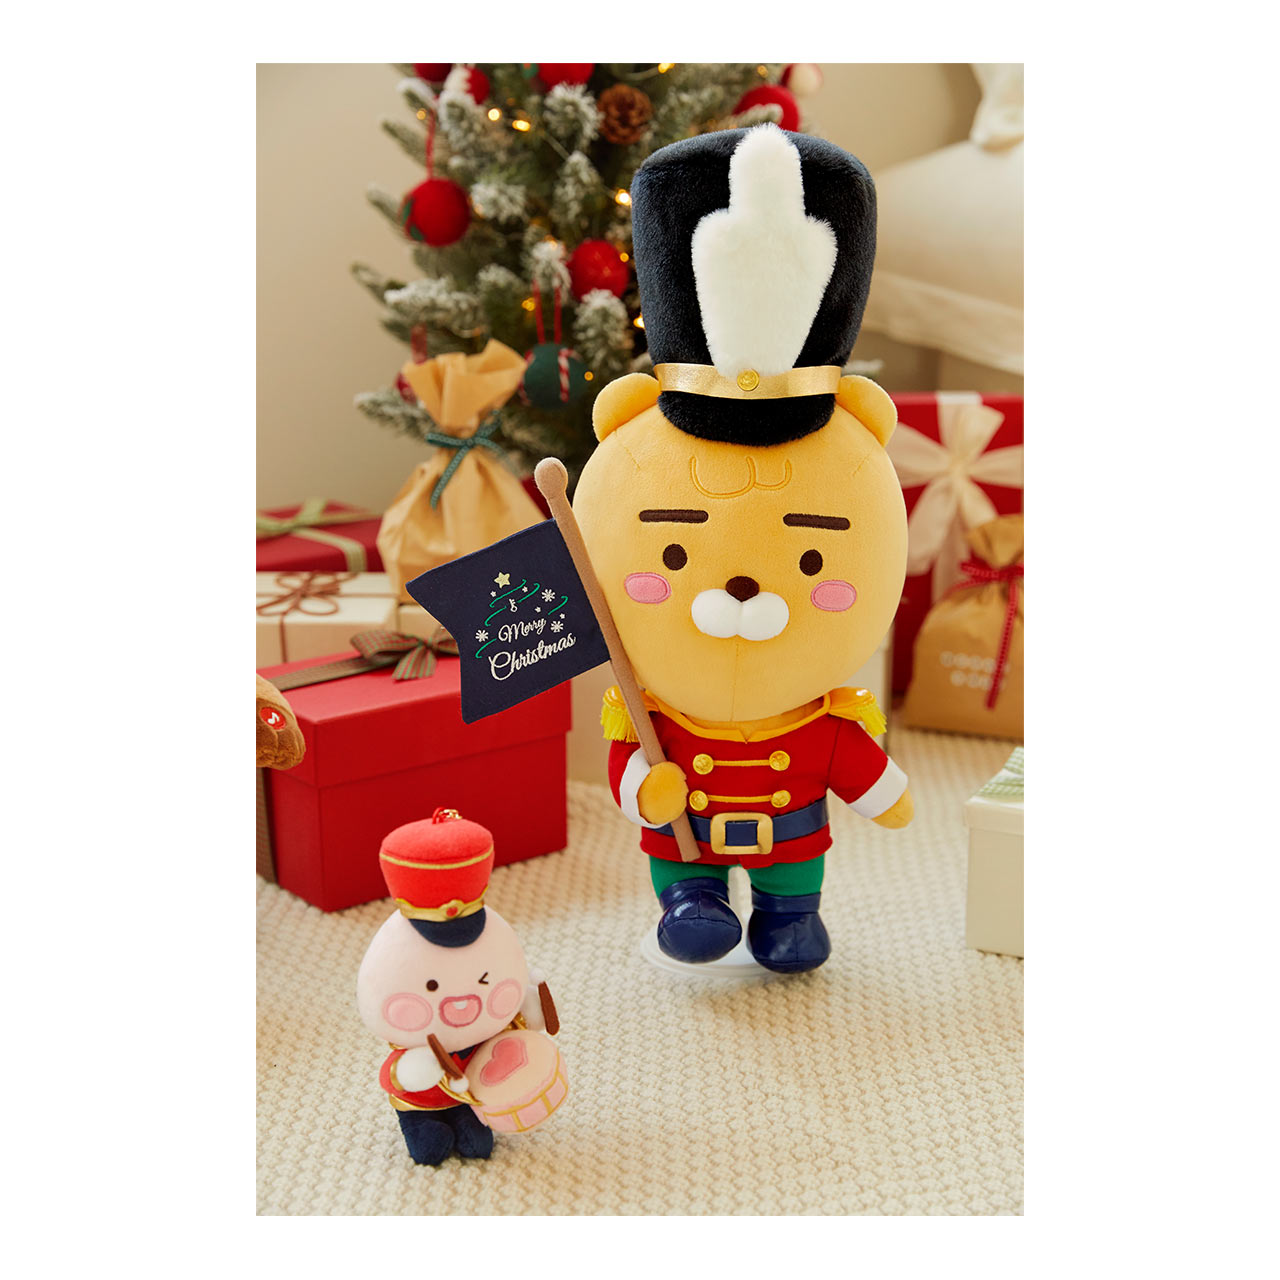 Kakao Friends (My Christmas) Cookie Socks Doll | Daebak, Ryan